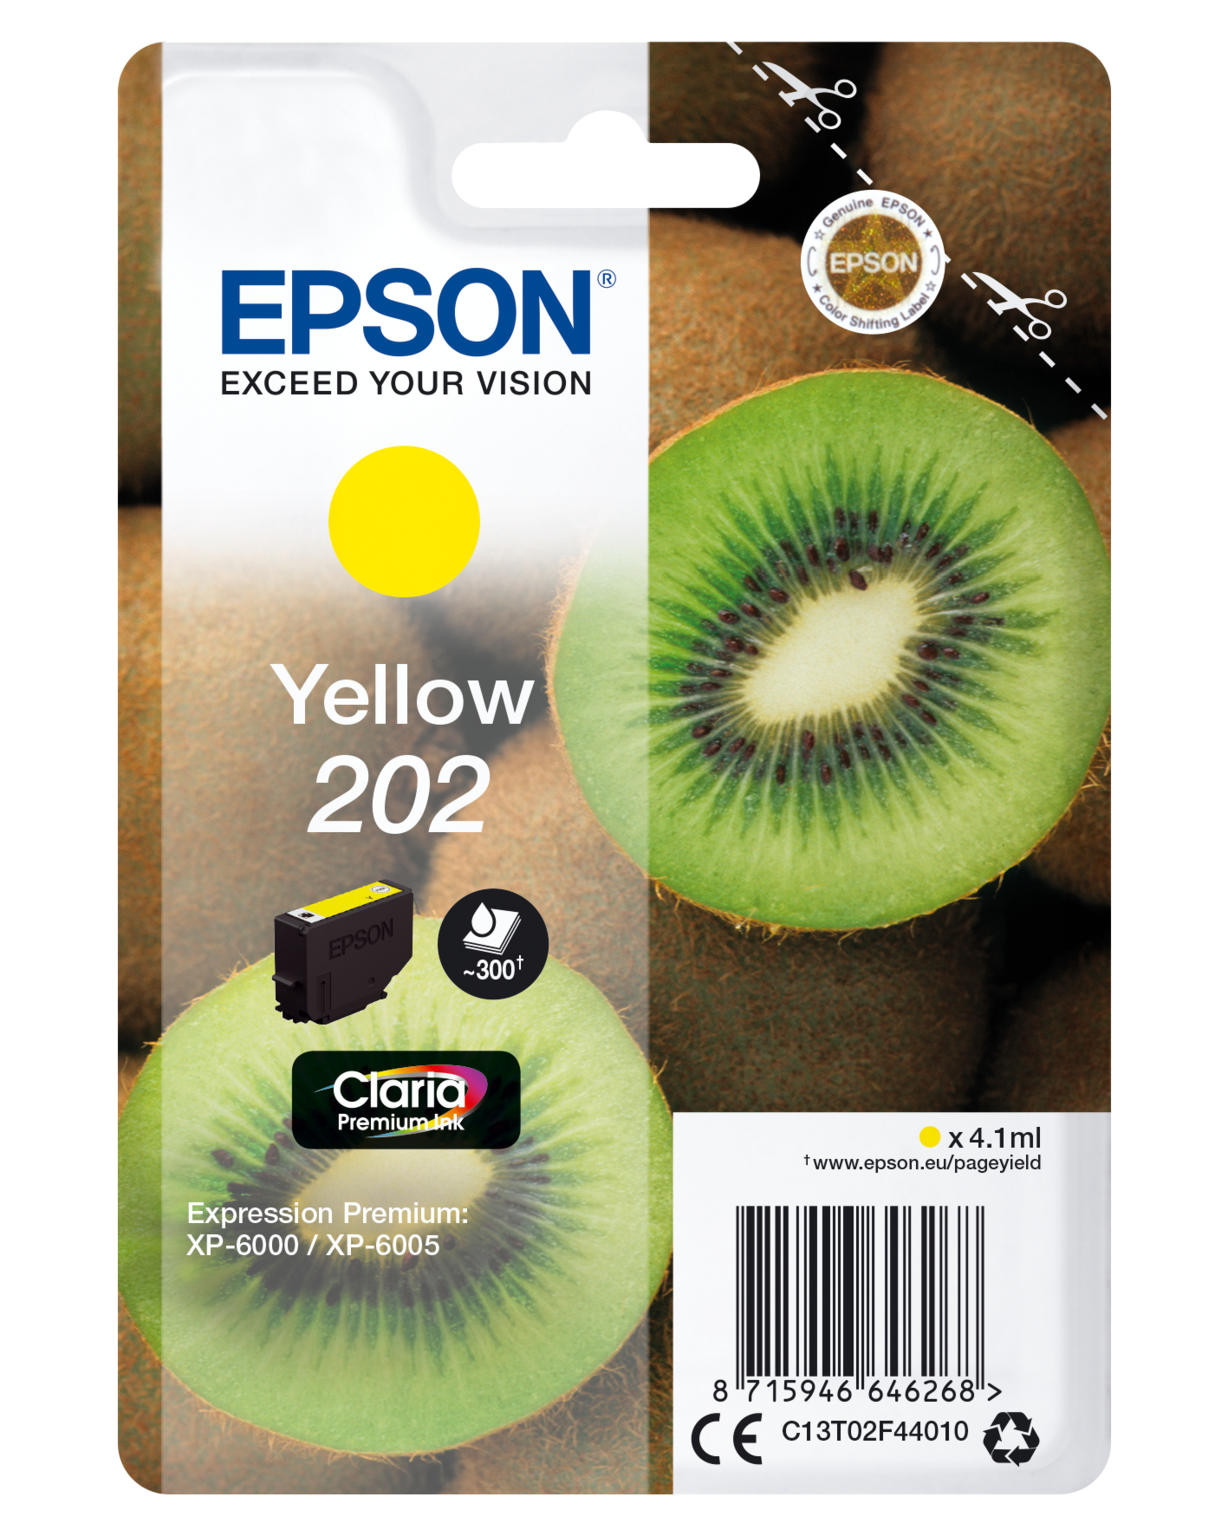 Epson 202 geel